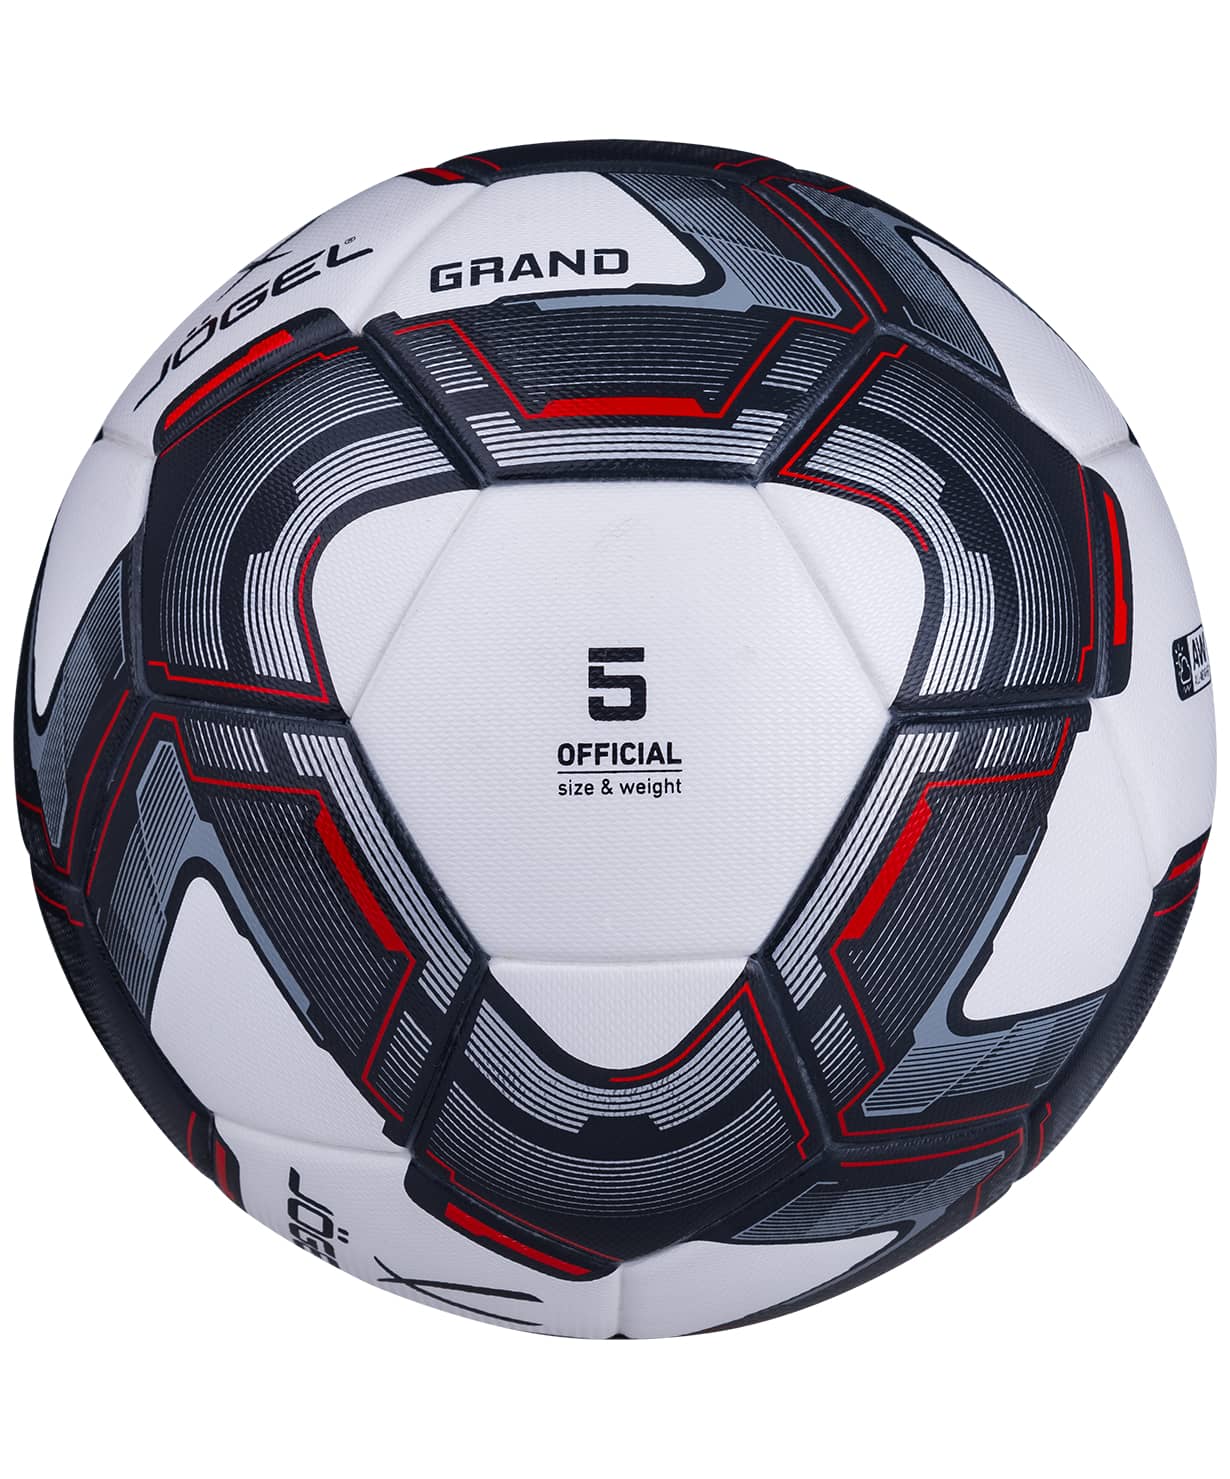 Мяч футбольный №5 Jogel Grand №5 BC20 16943